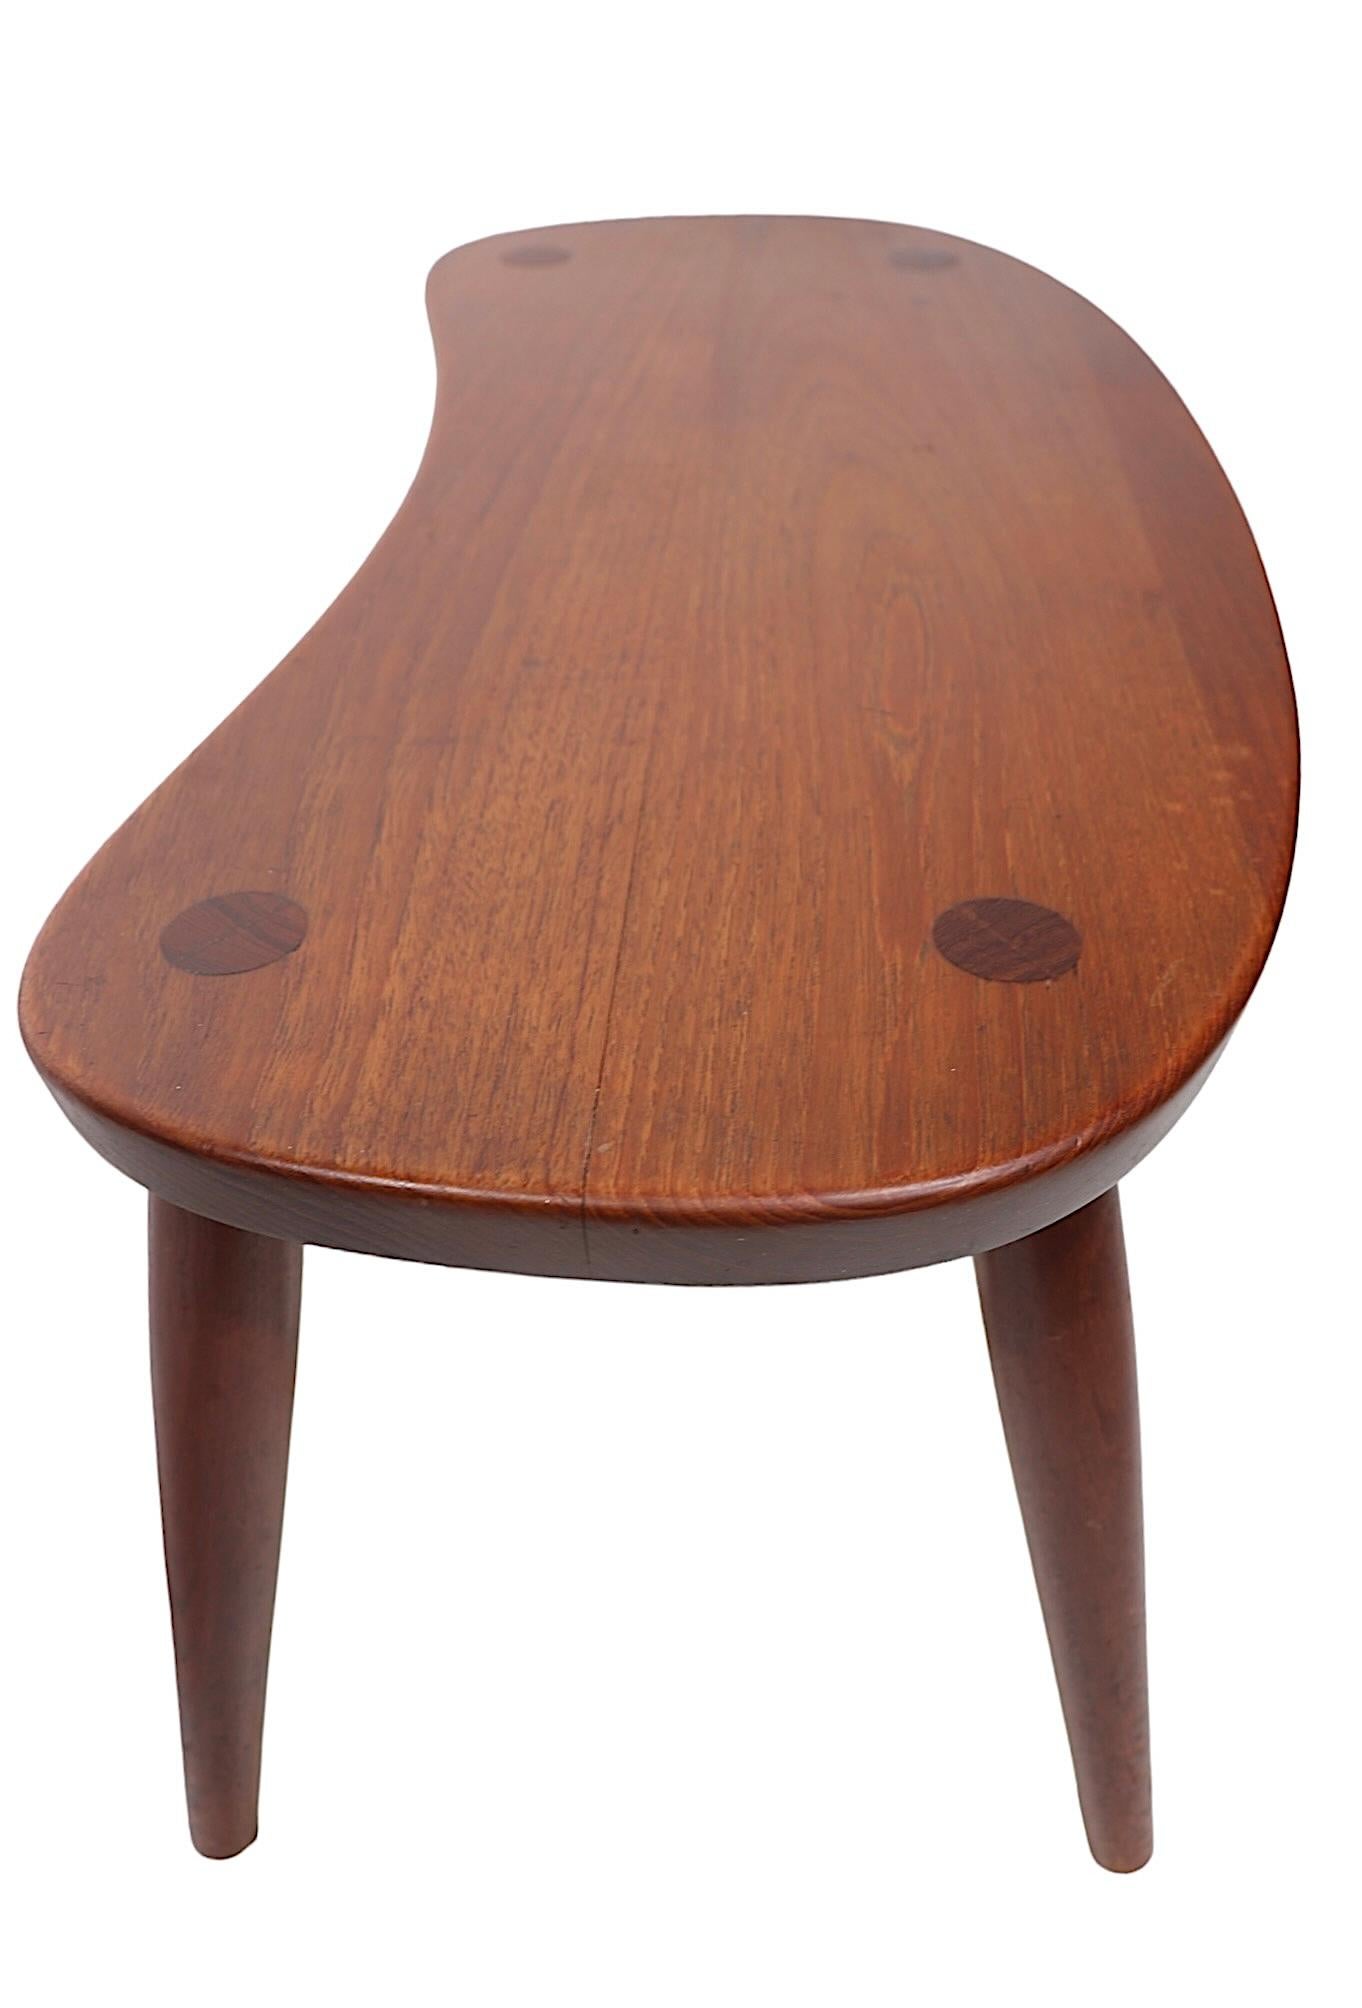 Pr. Danish Mid Century Modern Tables Made by Illum Bolighus att. to Josef Frank  For Sale 2